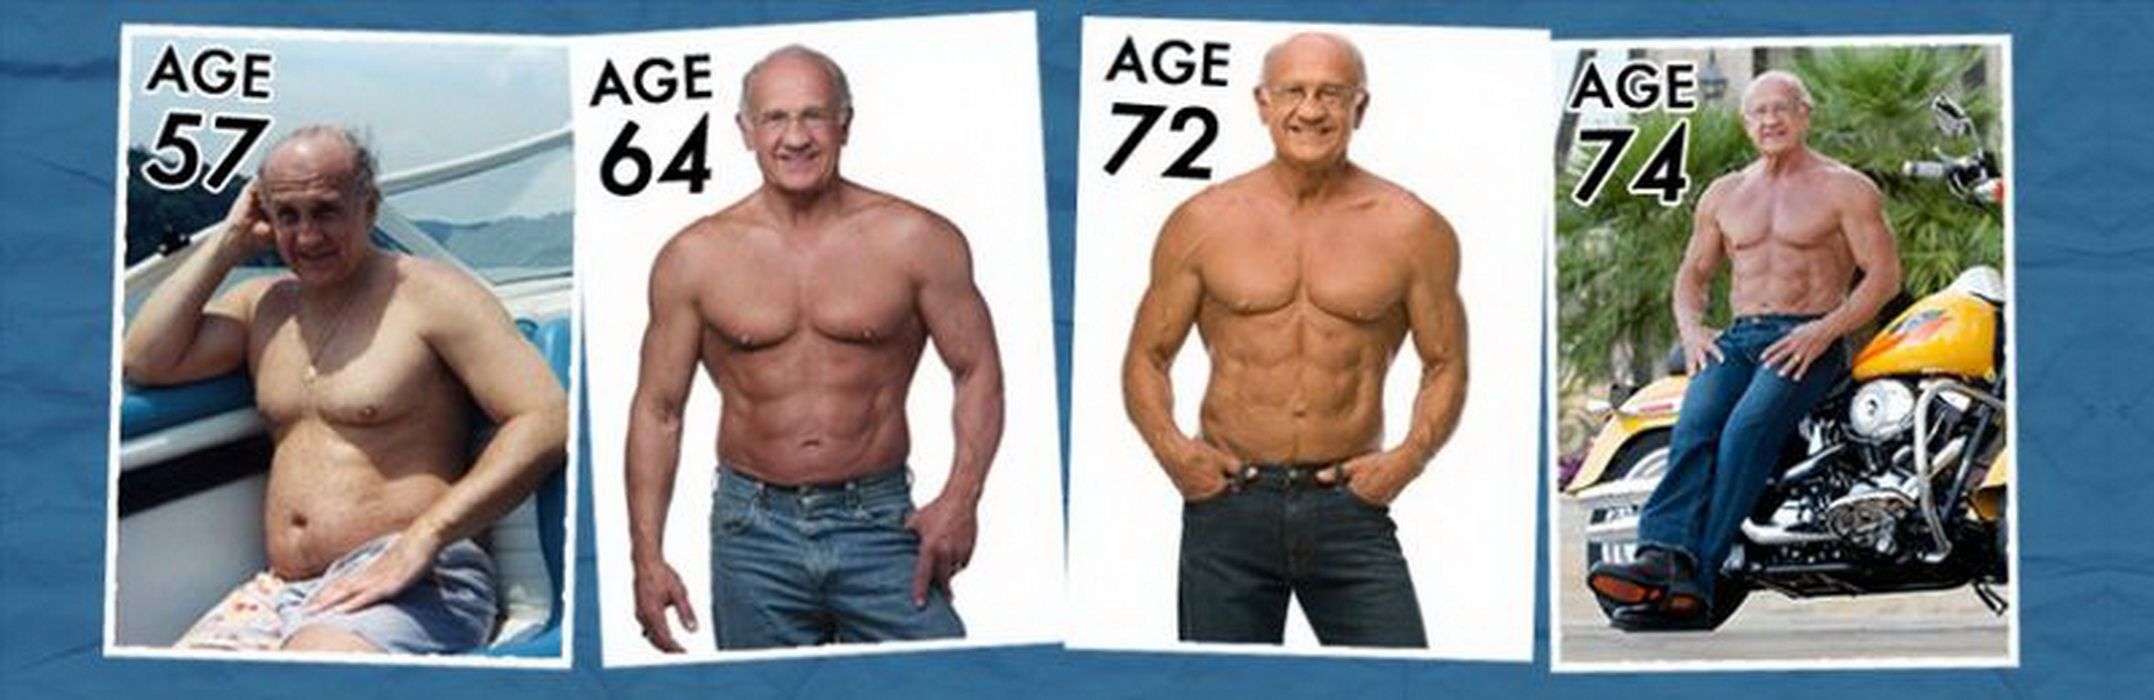 Мужчины после 75 лет